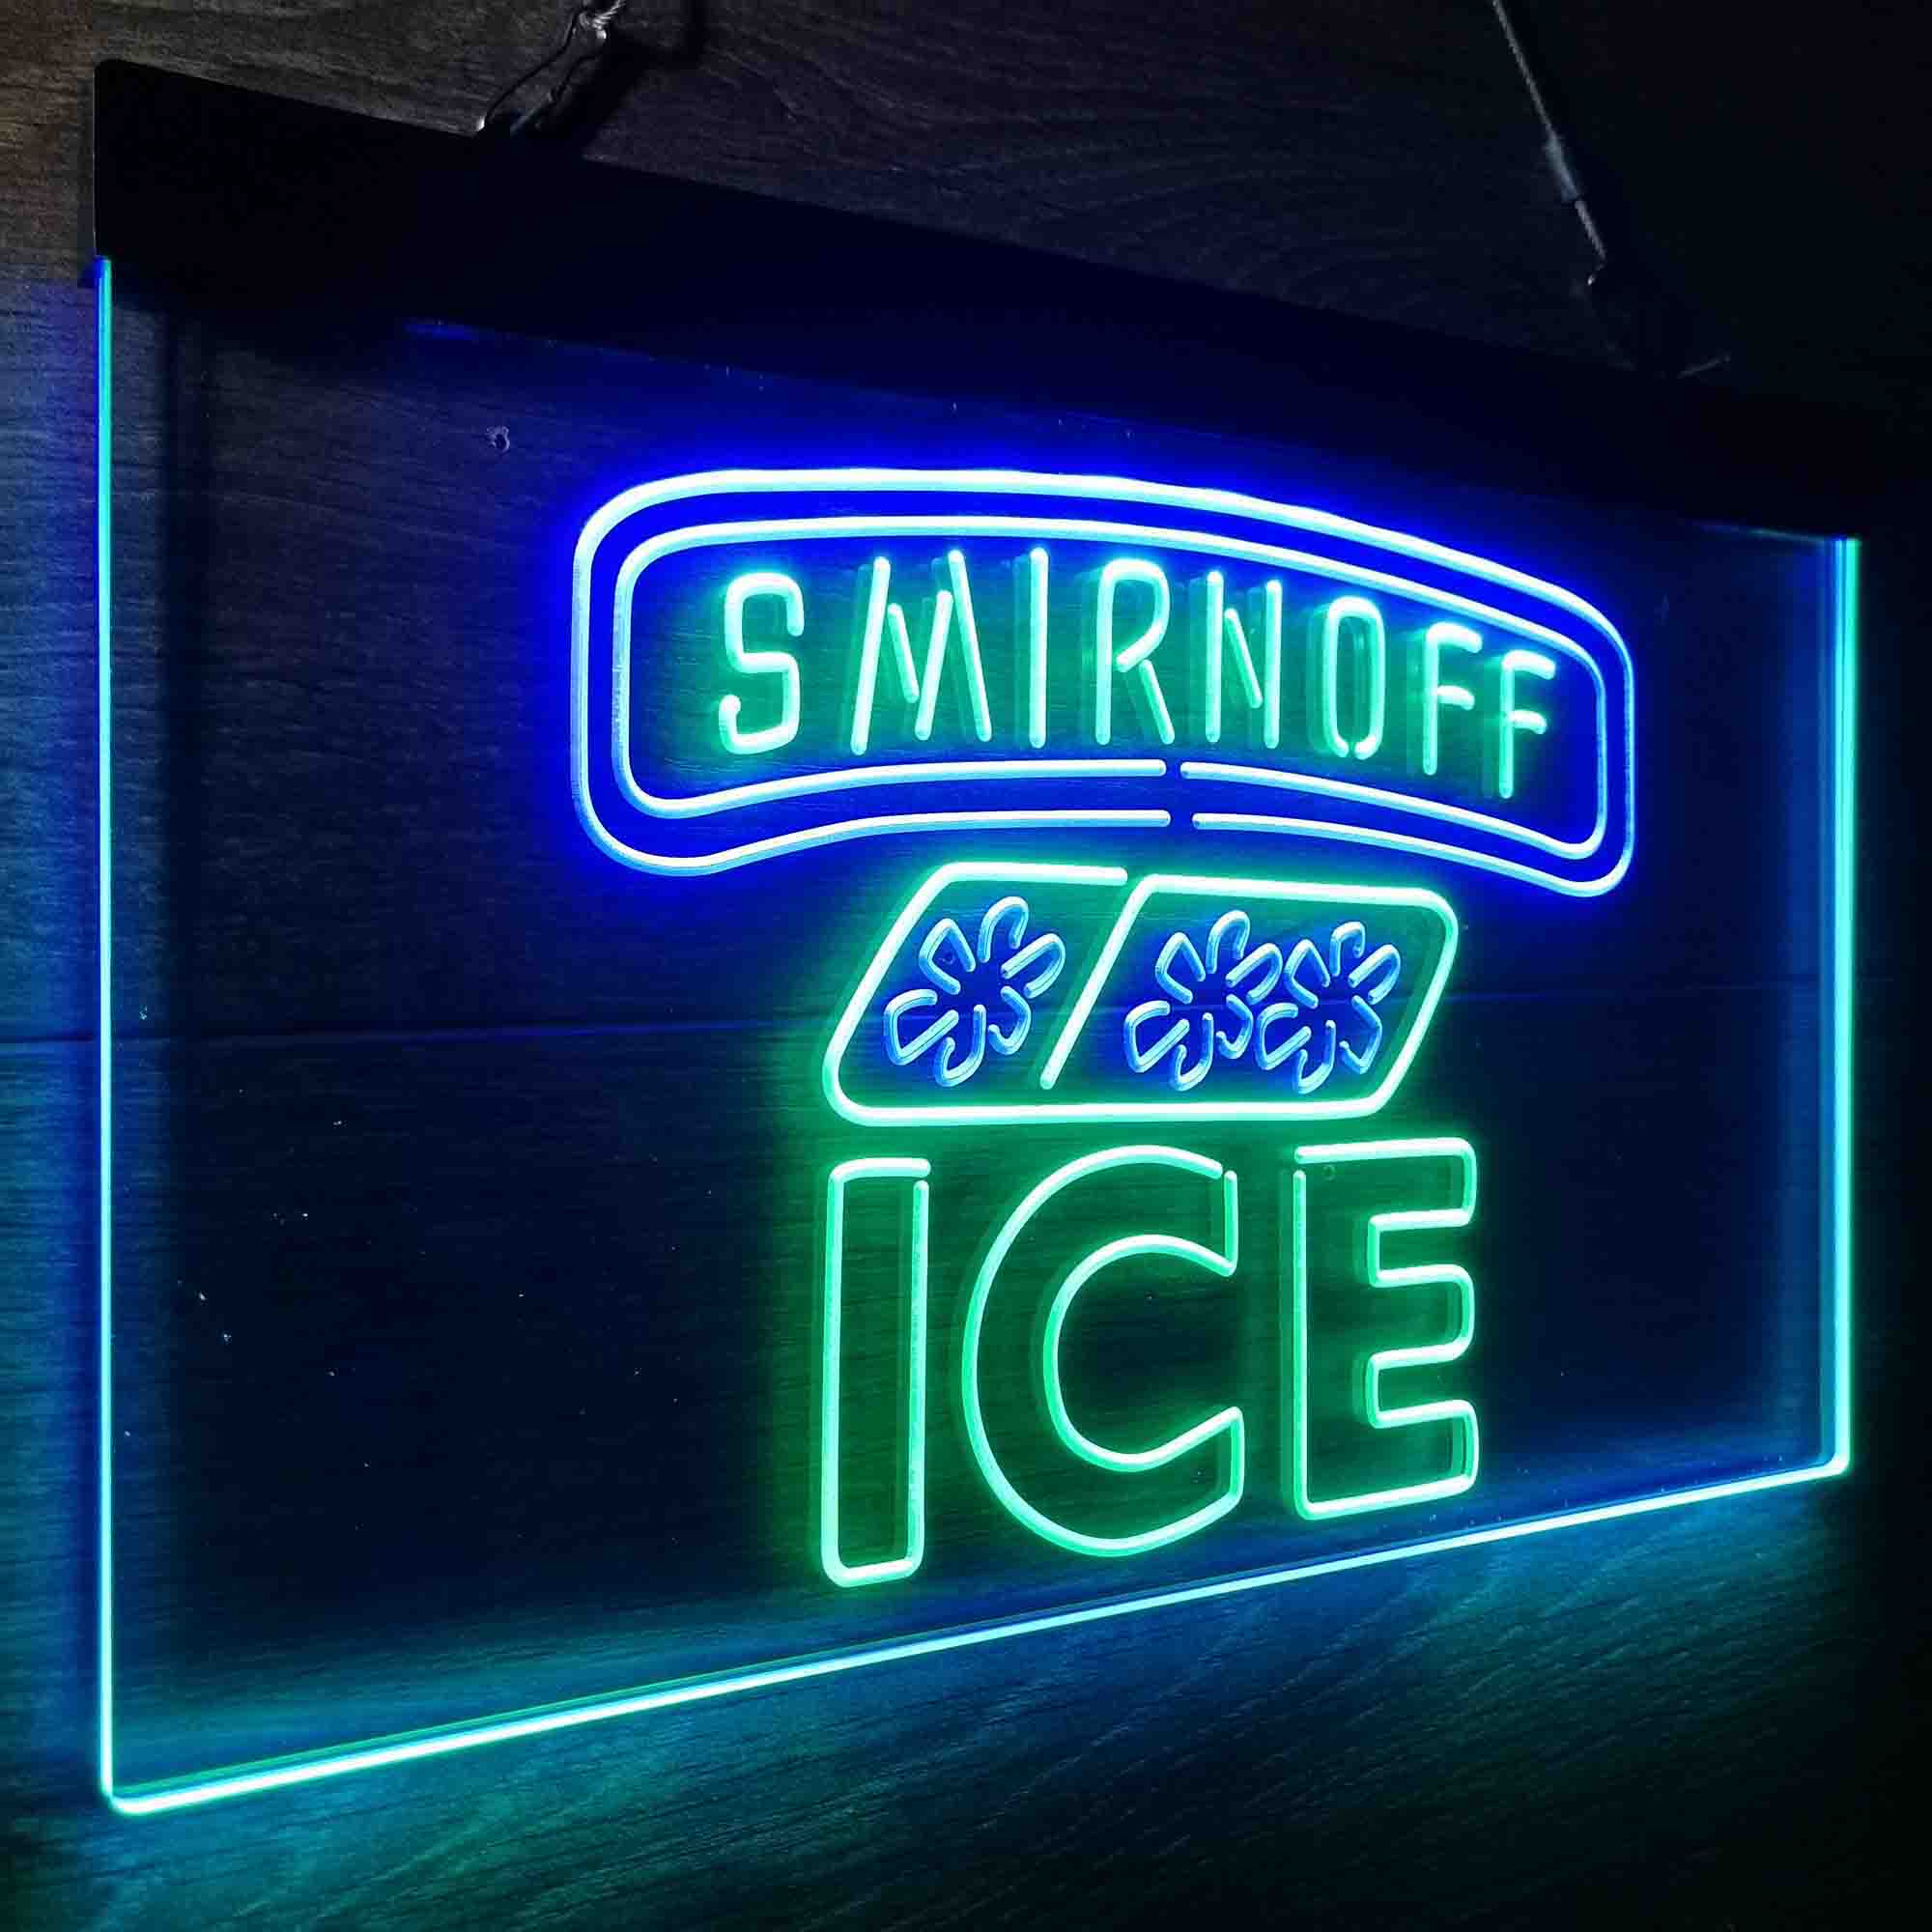 Smirnoff Ice Beverages Neon-Like LED Sign